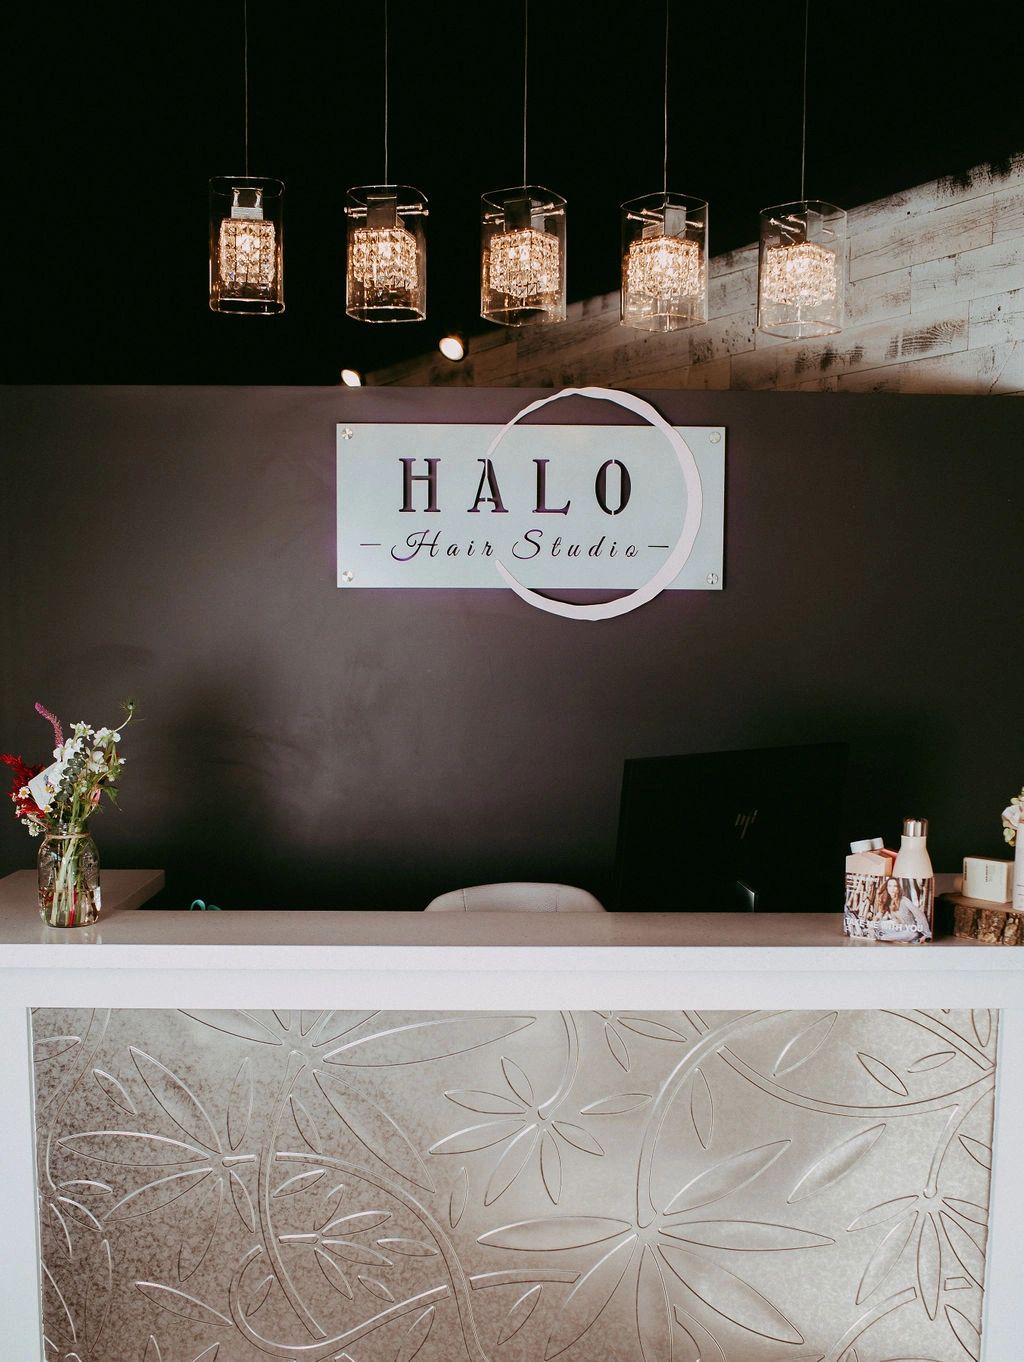 Illuminated store frontage reads "Halo Hair Studio"